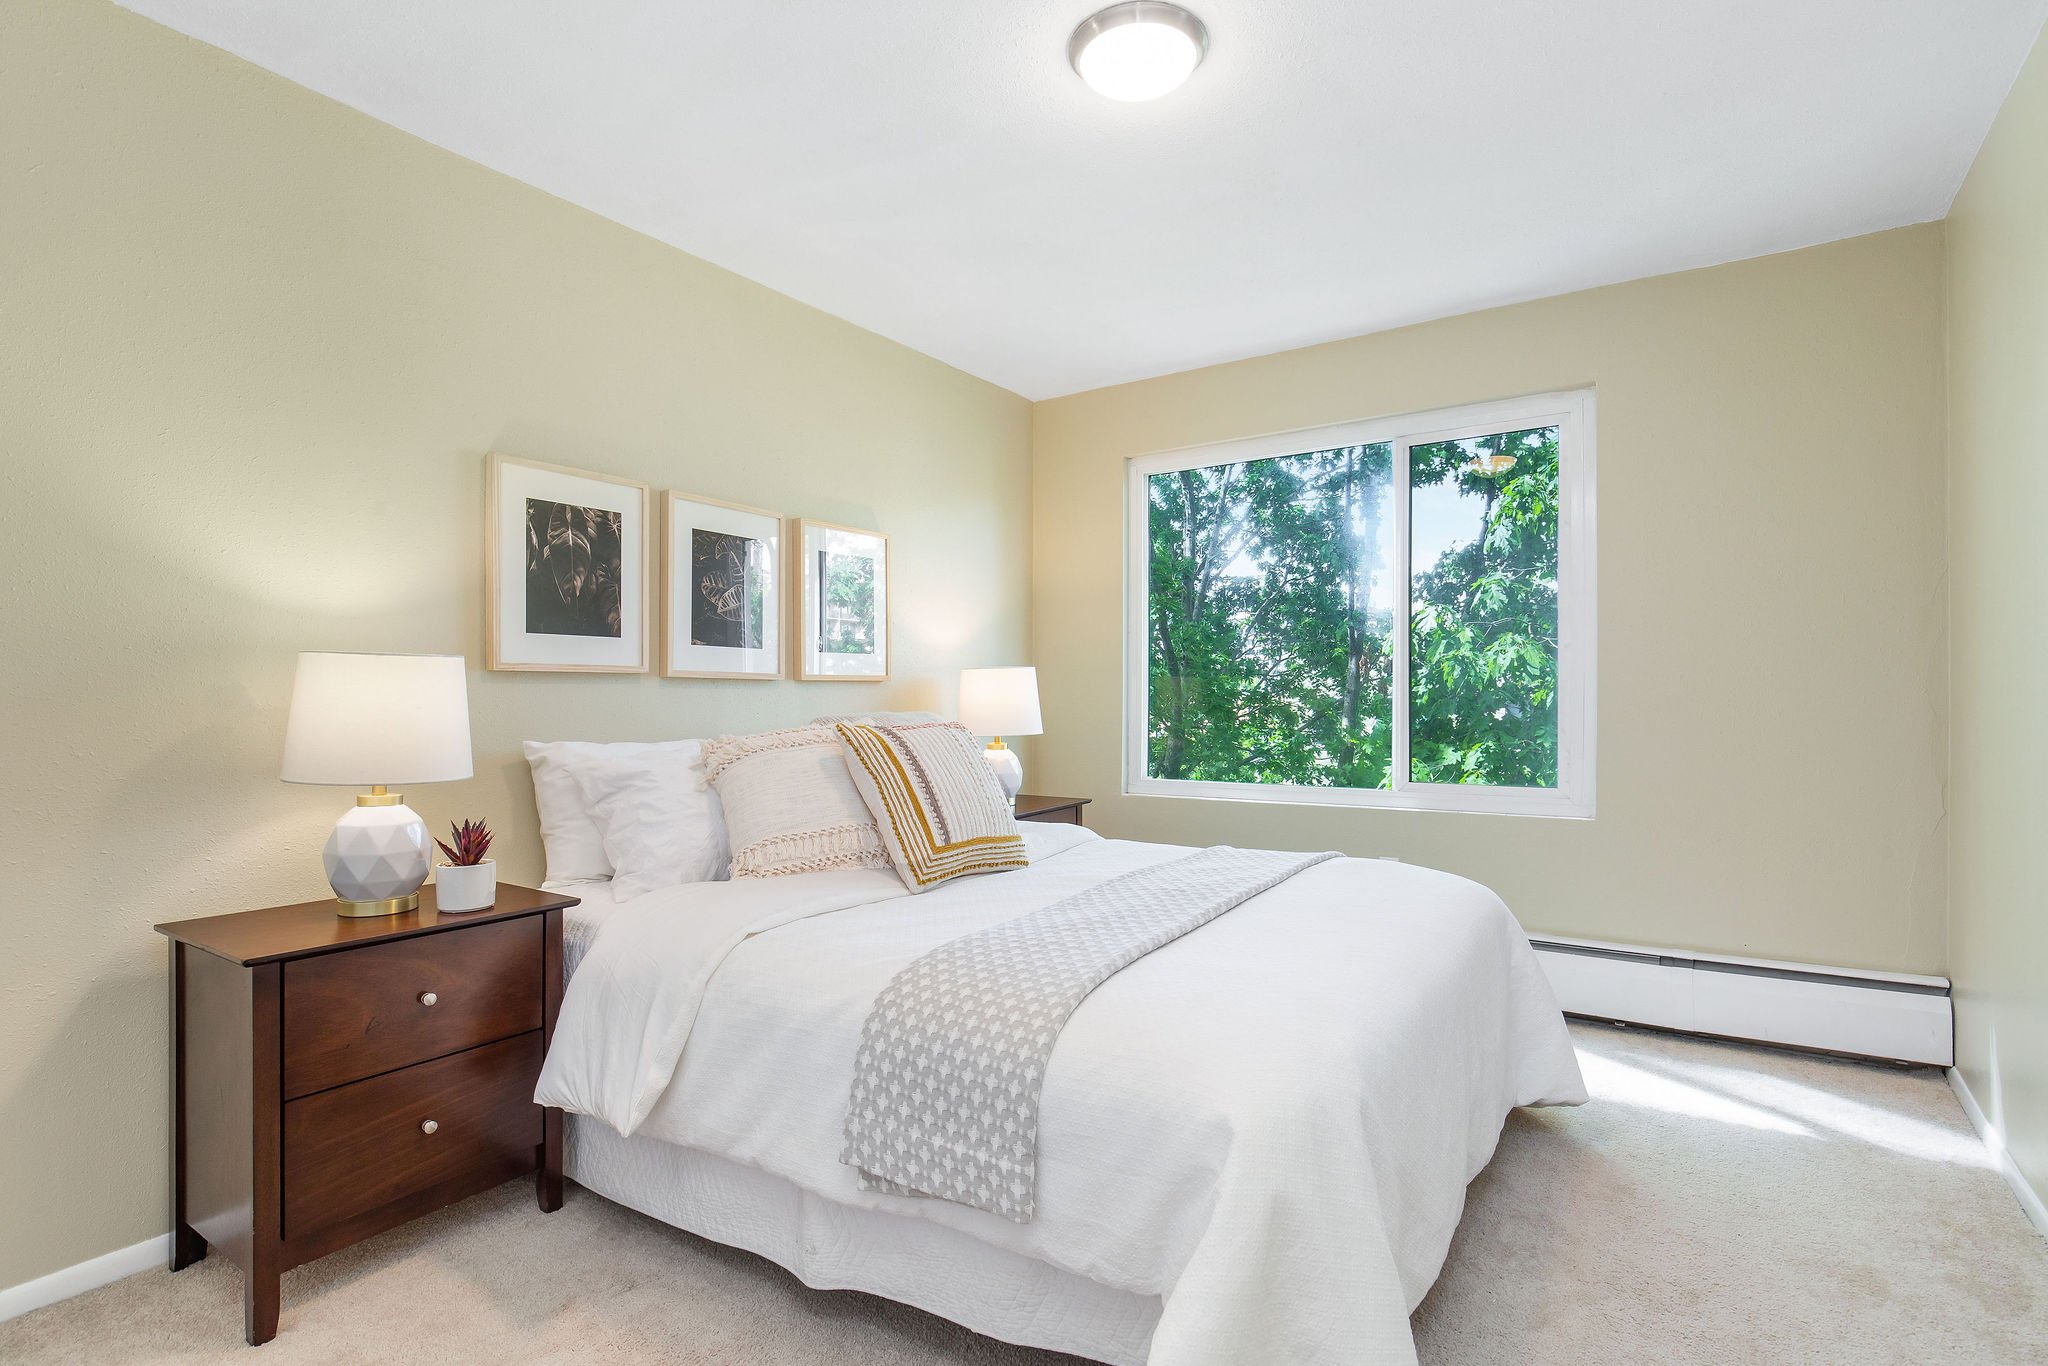  image description: interior of bedroom with queen bed, window, and tan carpet 